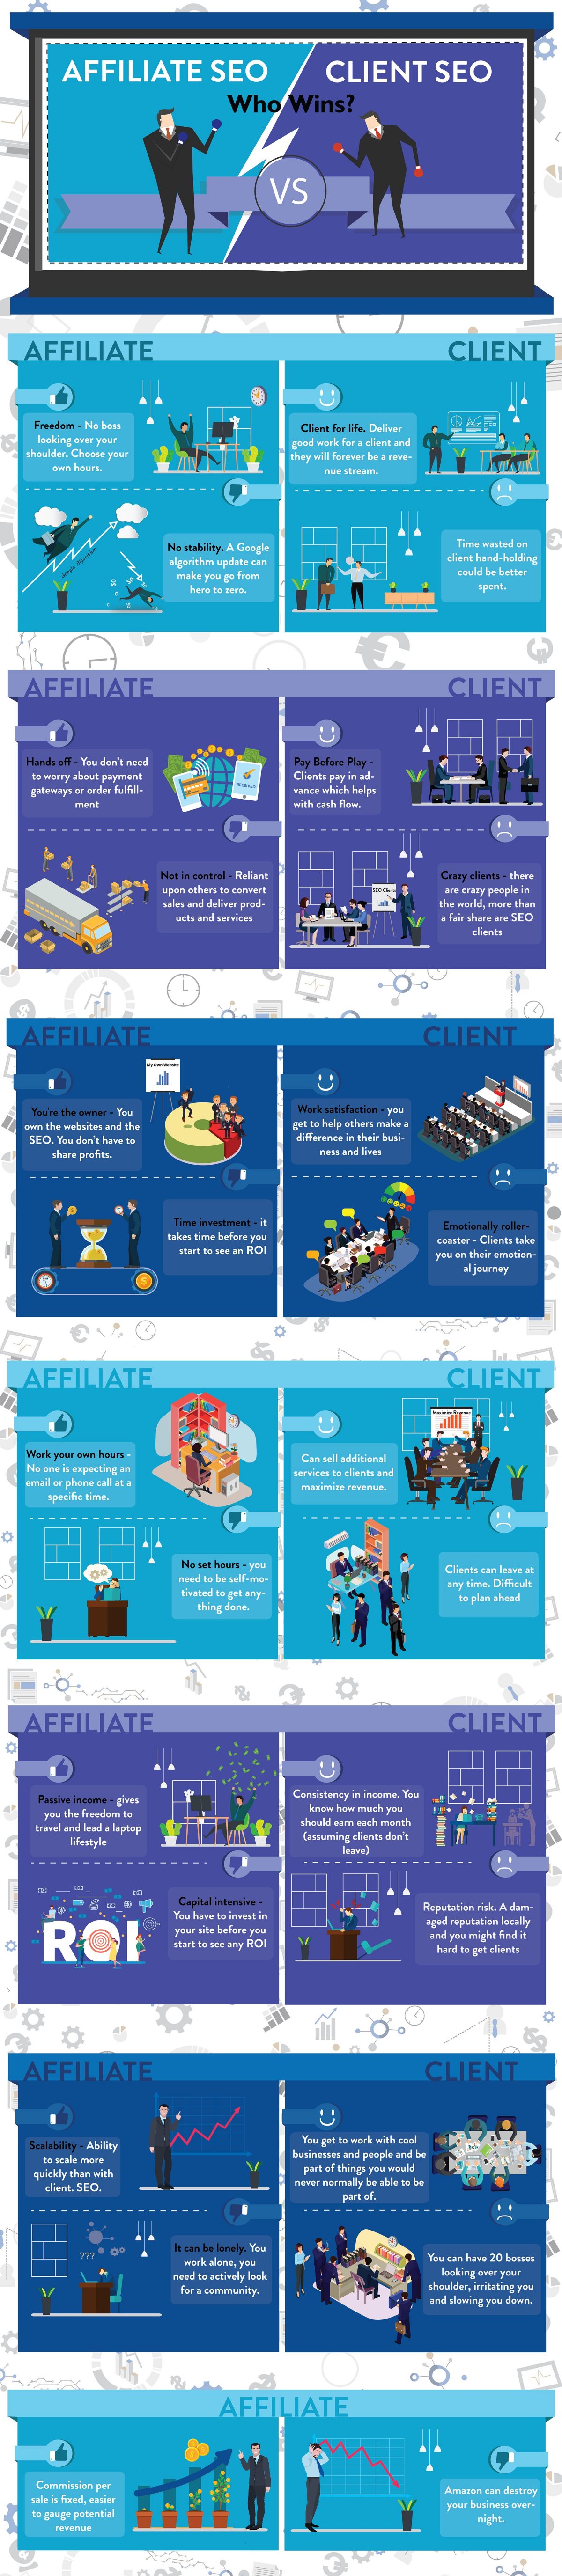 Infographic-AffiliateSEO-vs-ClientSEO